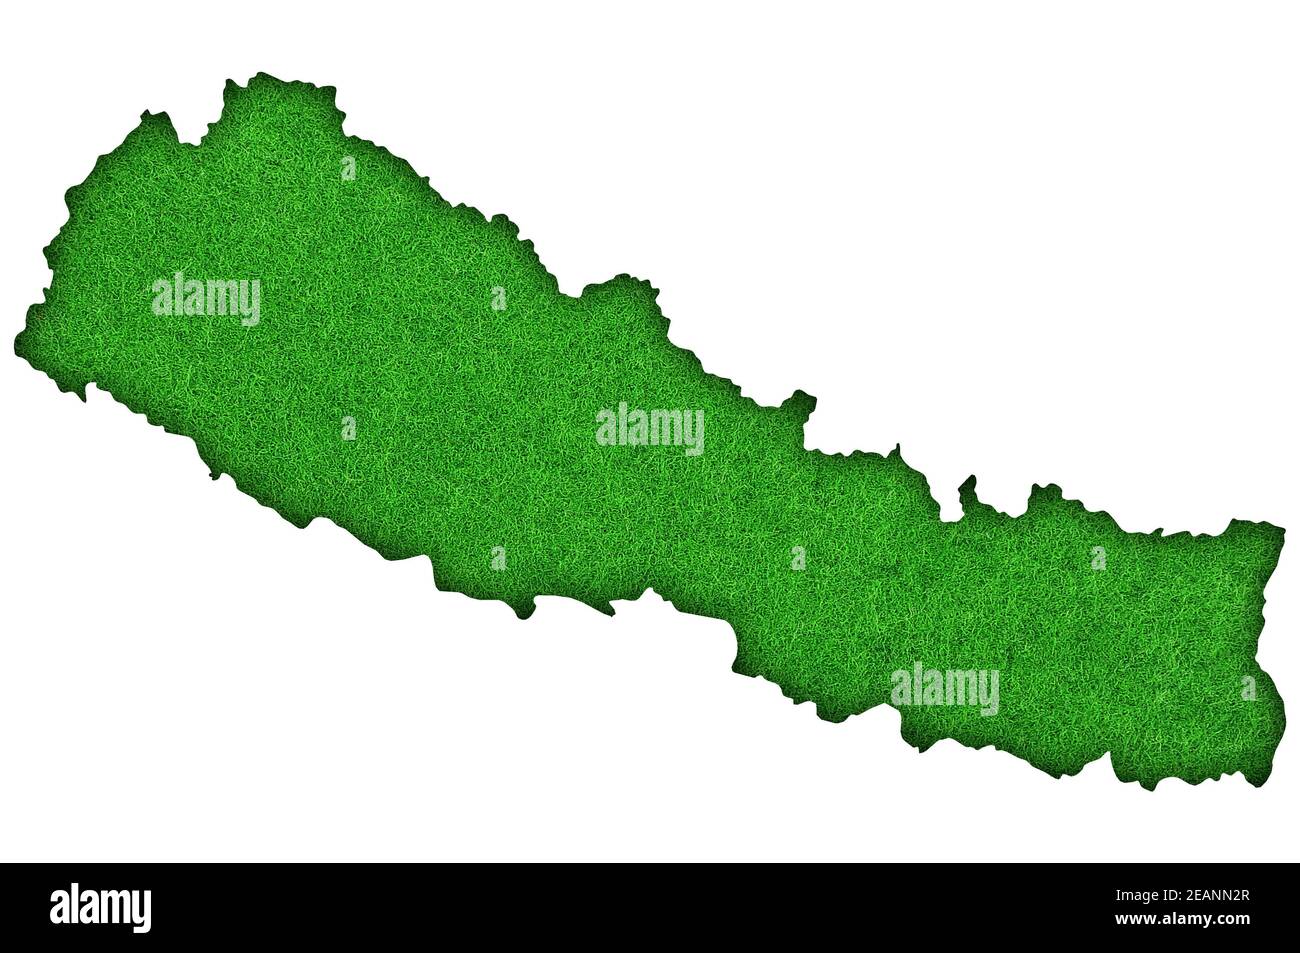 Map of Nepal on green felt Stock Photo